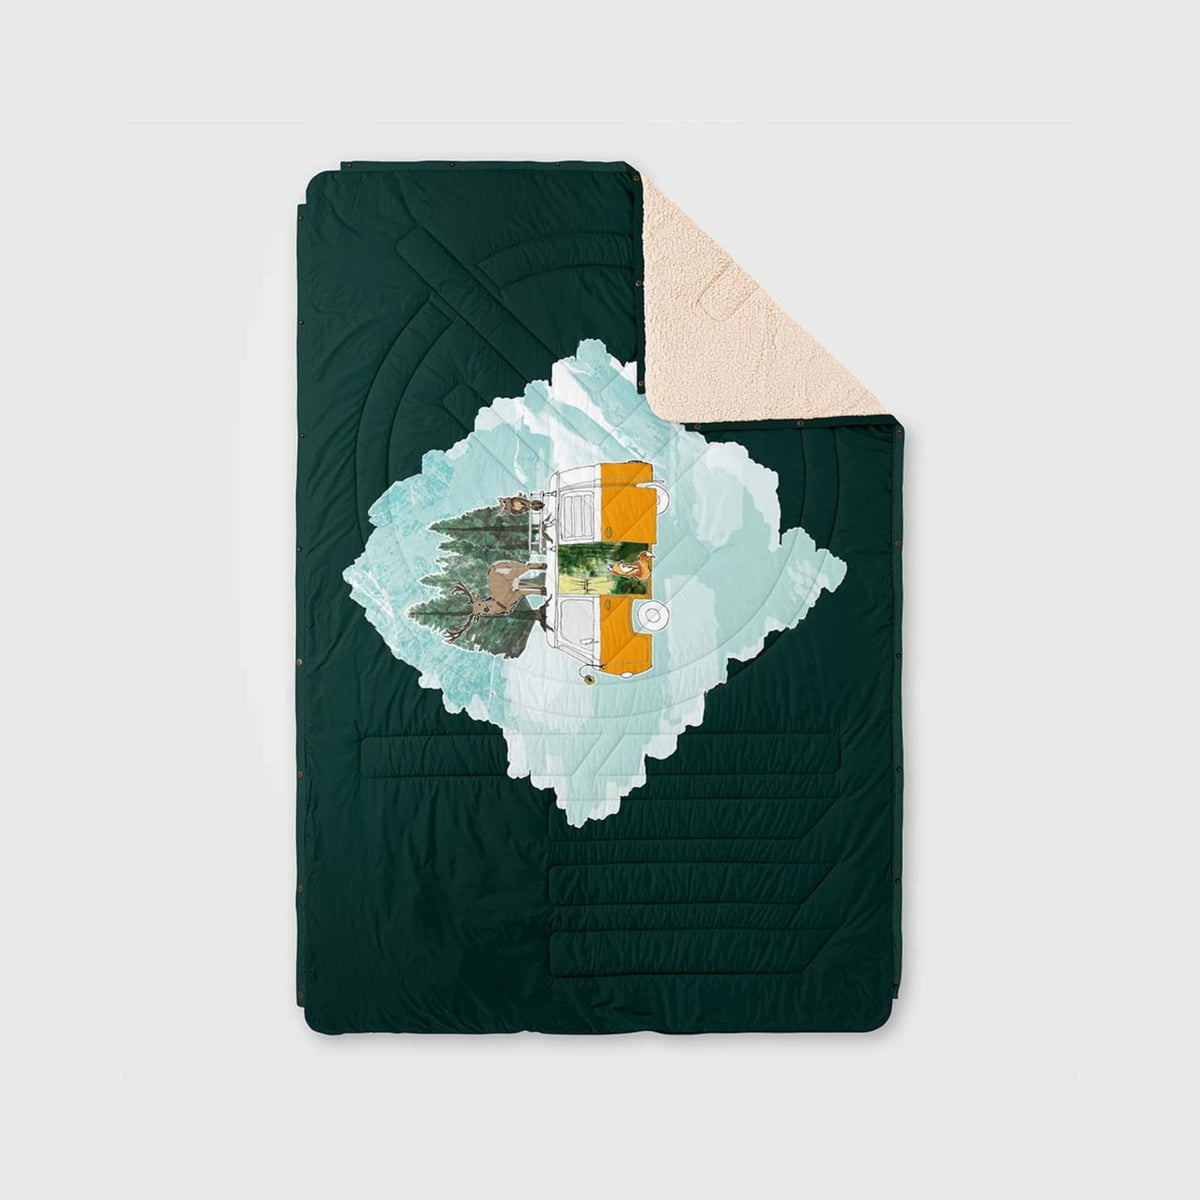 VOITED CloudTouch® Indoor/Outdoor Camping Blanket - Vanilla Icedream Blankets VOITED 